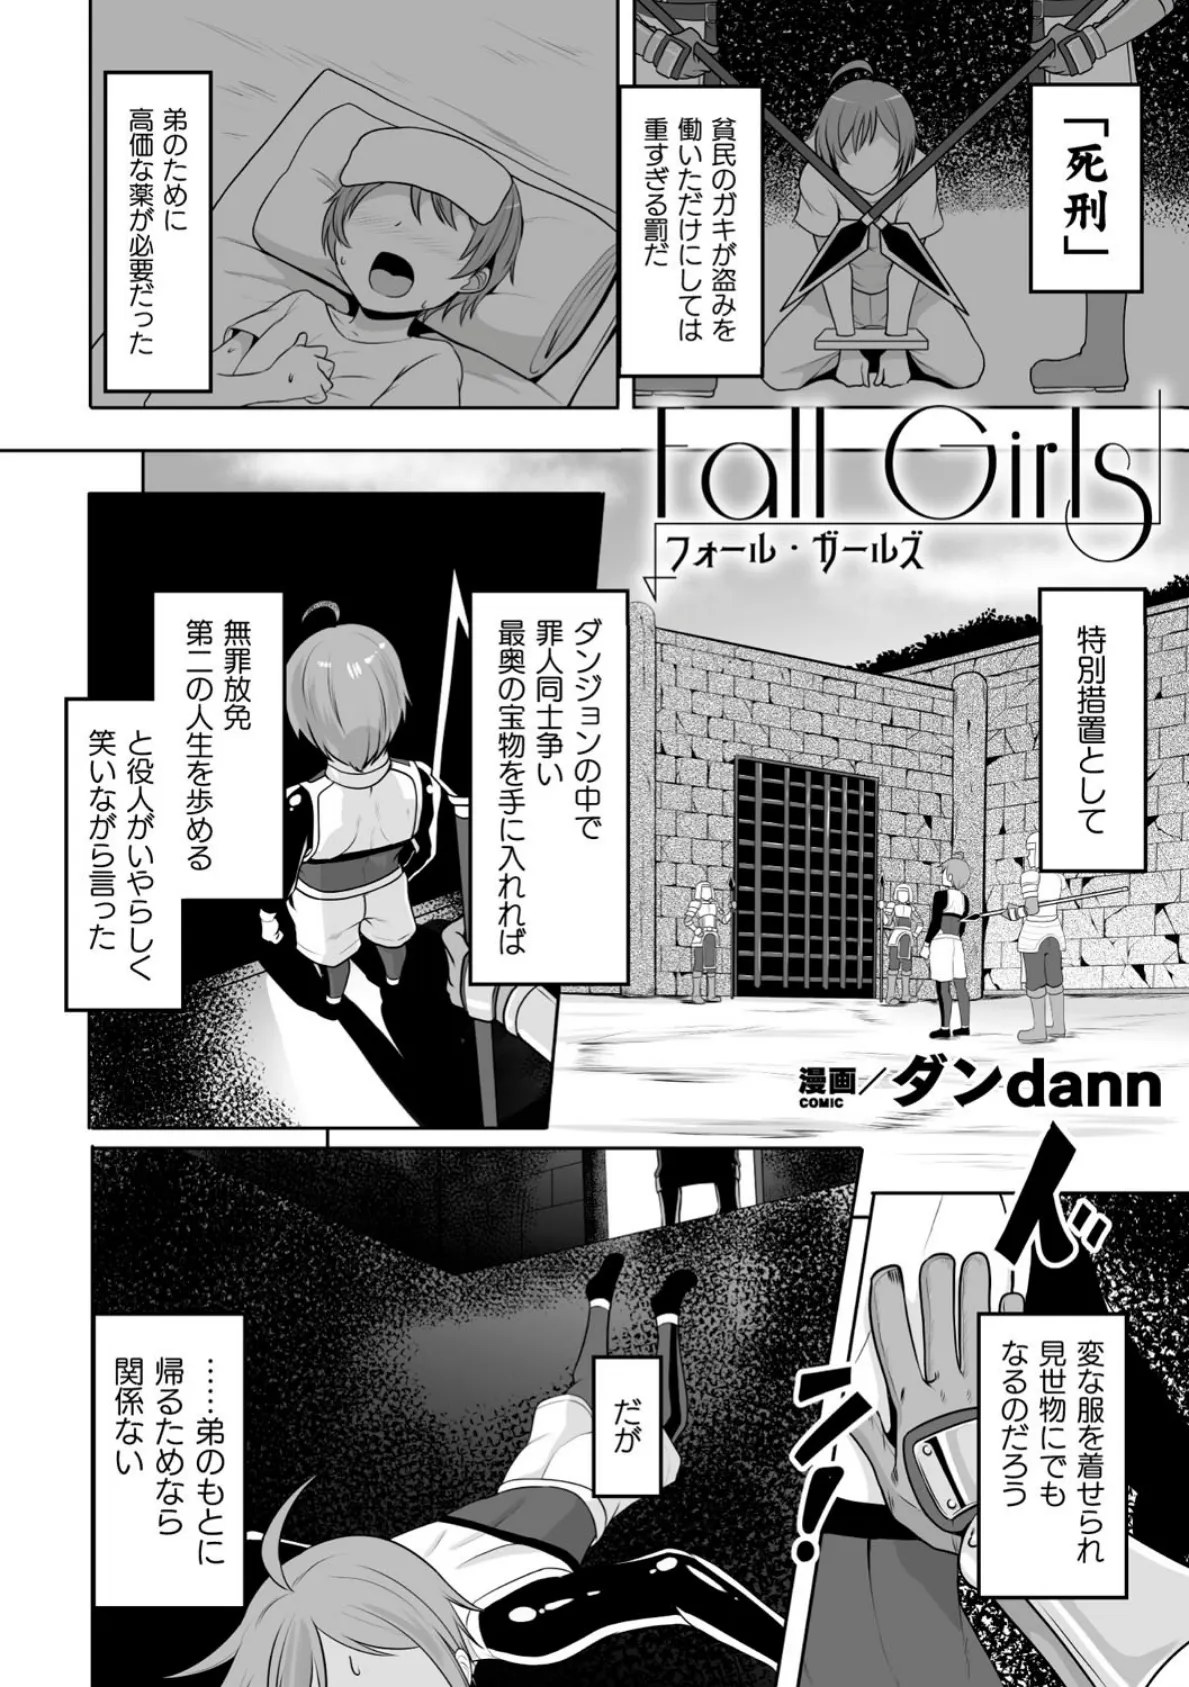 Fall Girls【単話】 2ページ